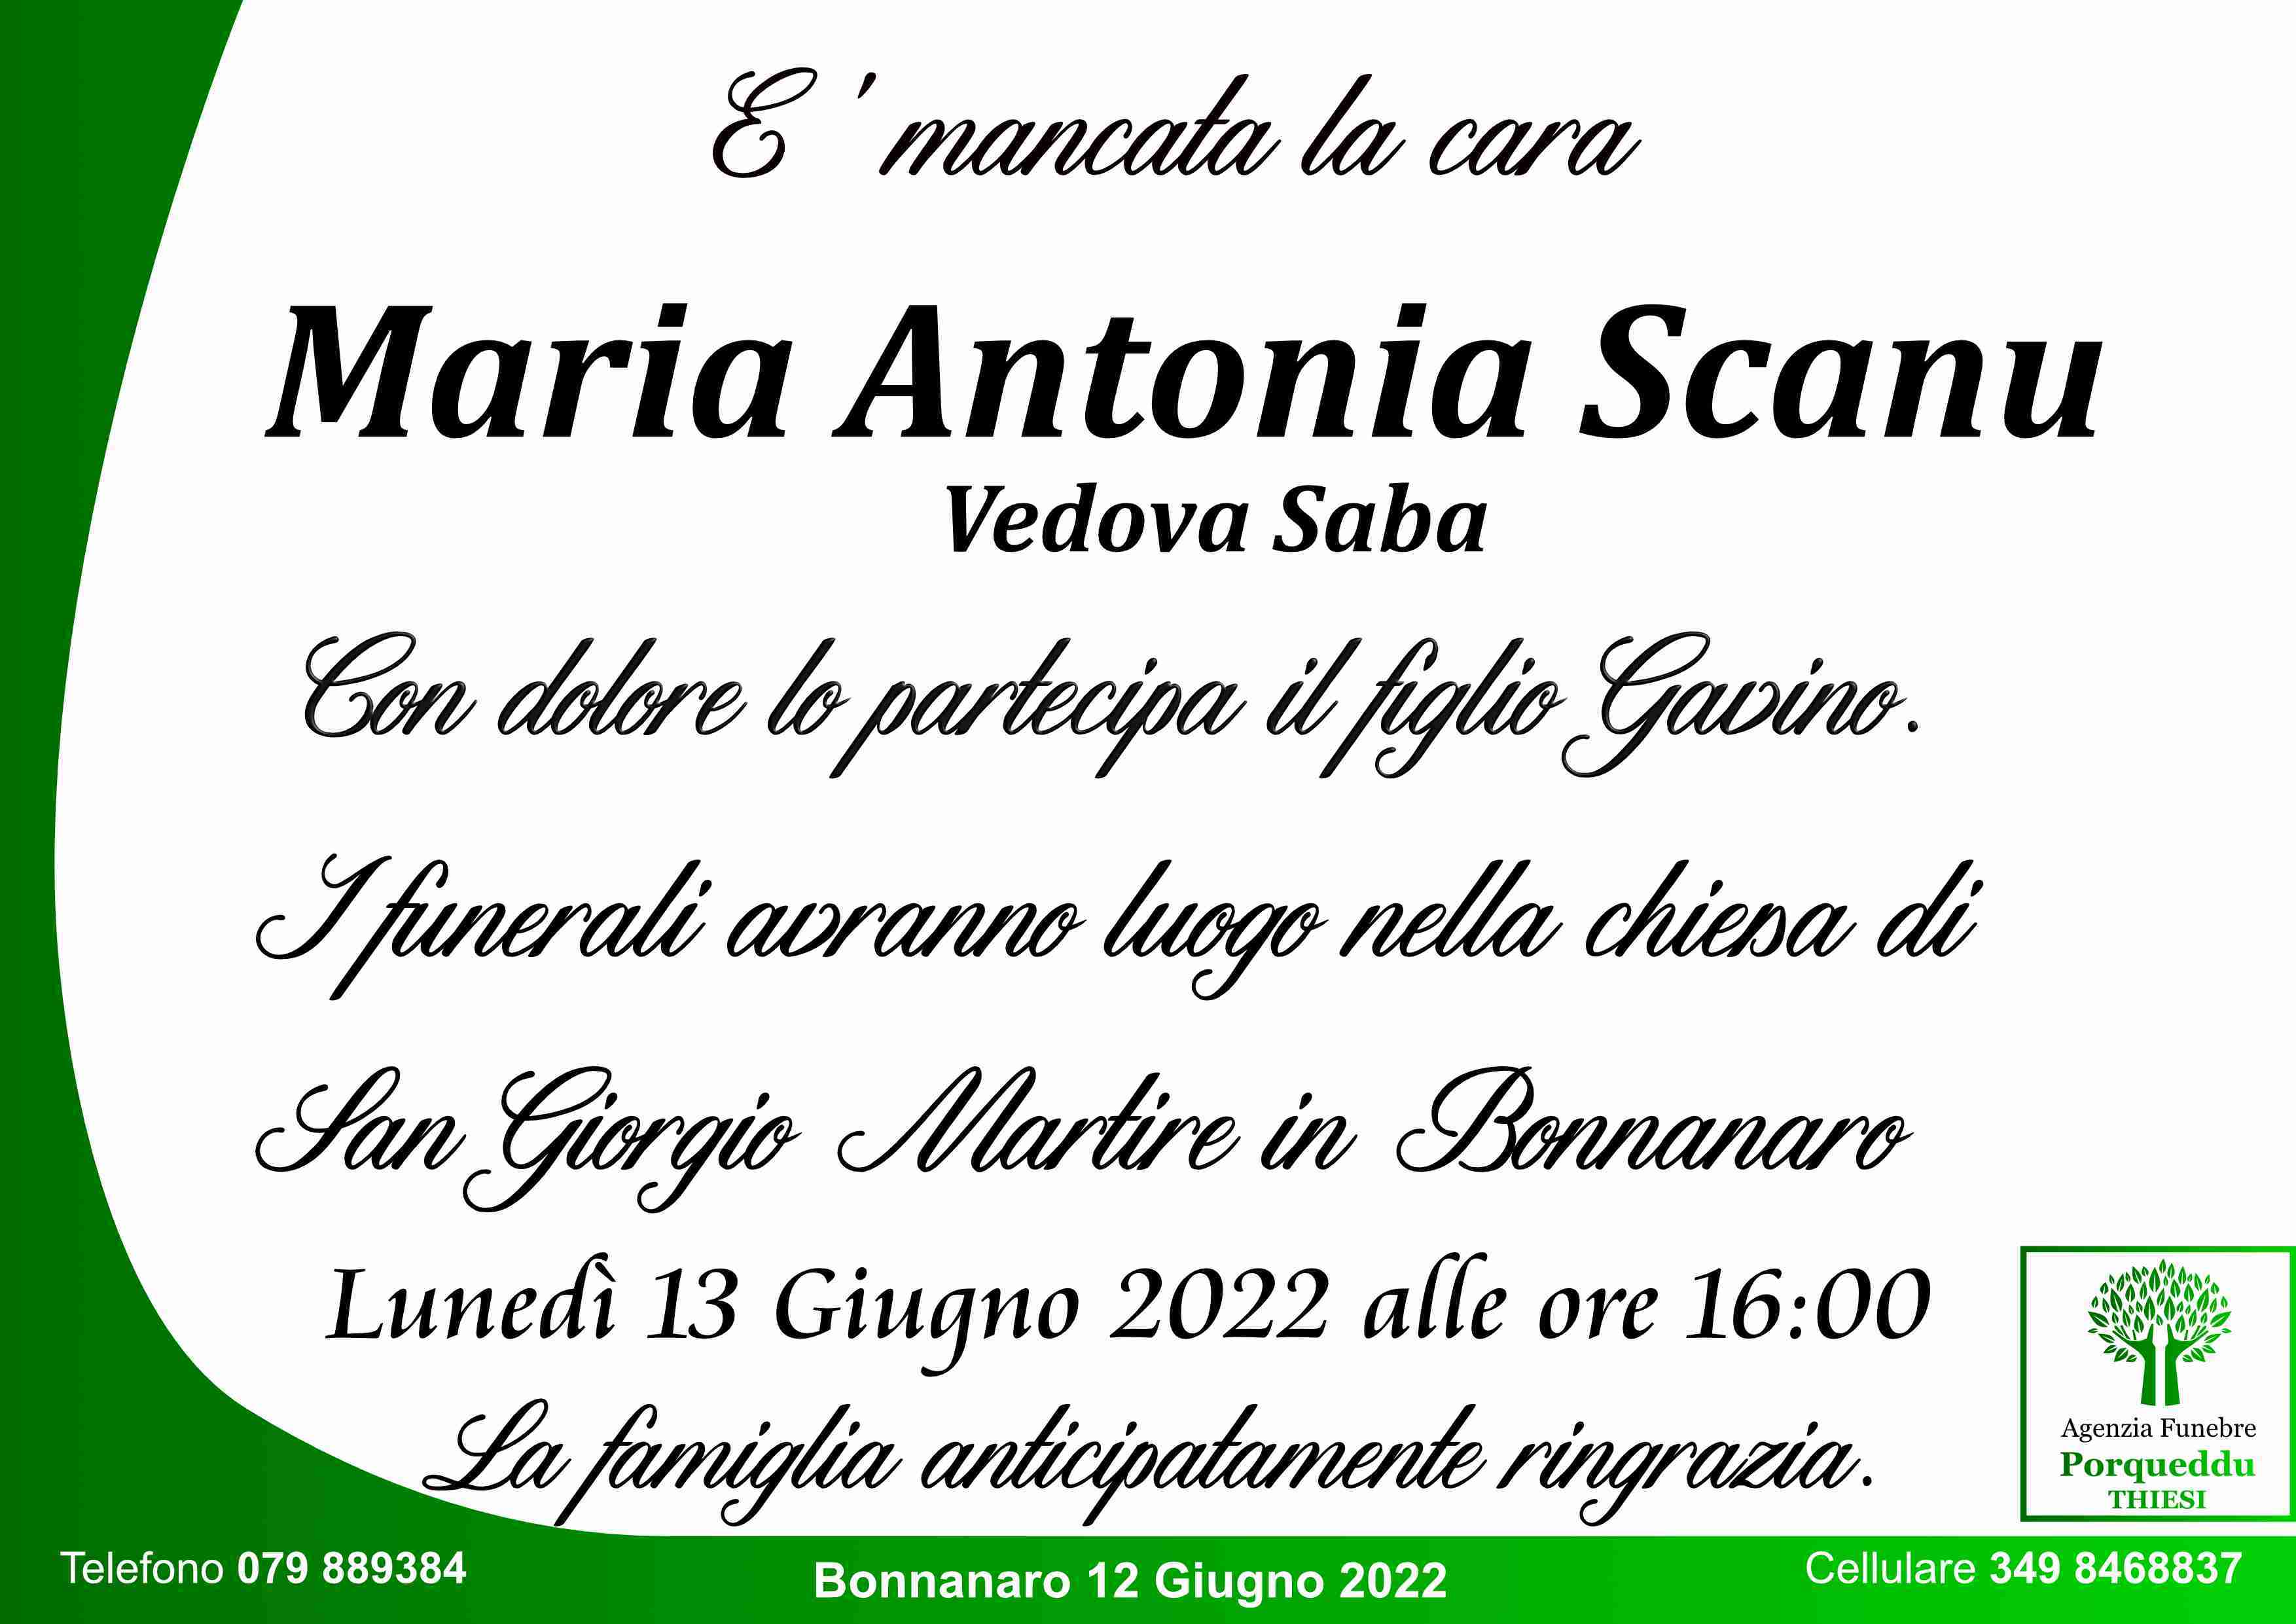 Maria Antonia Scanu